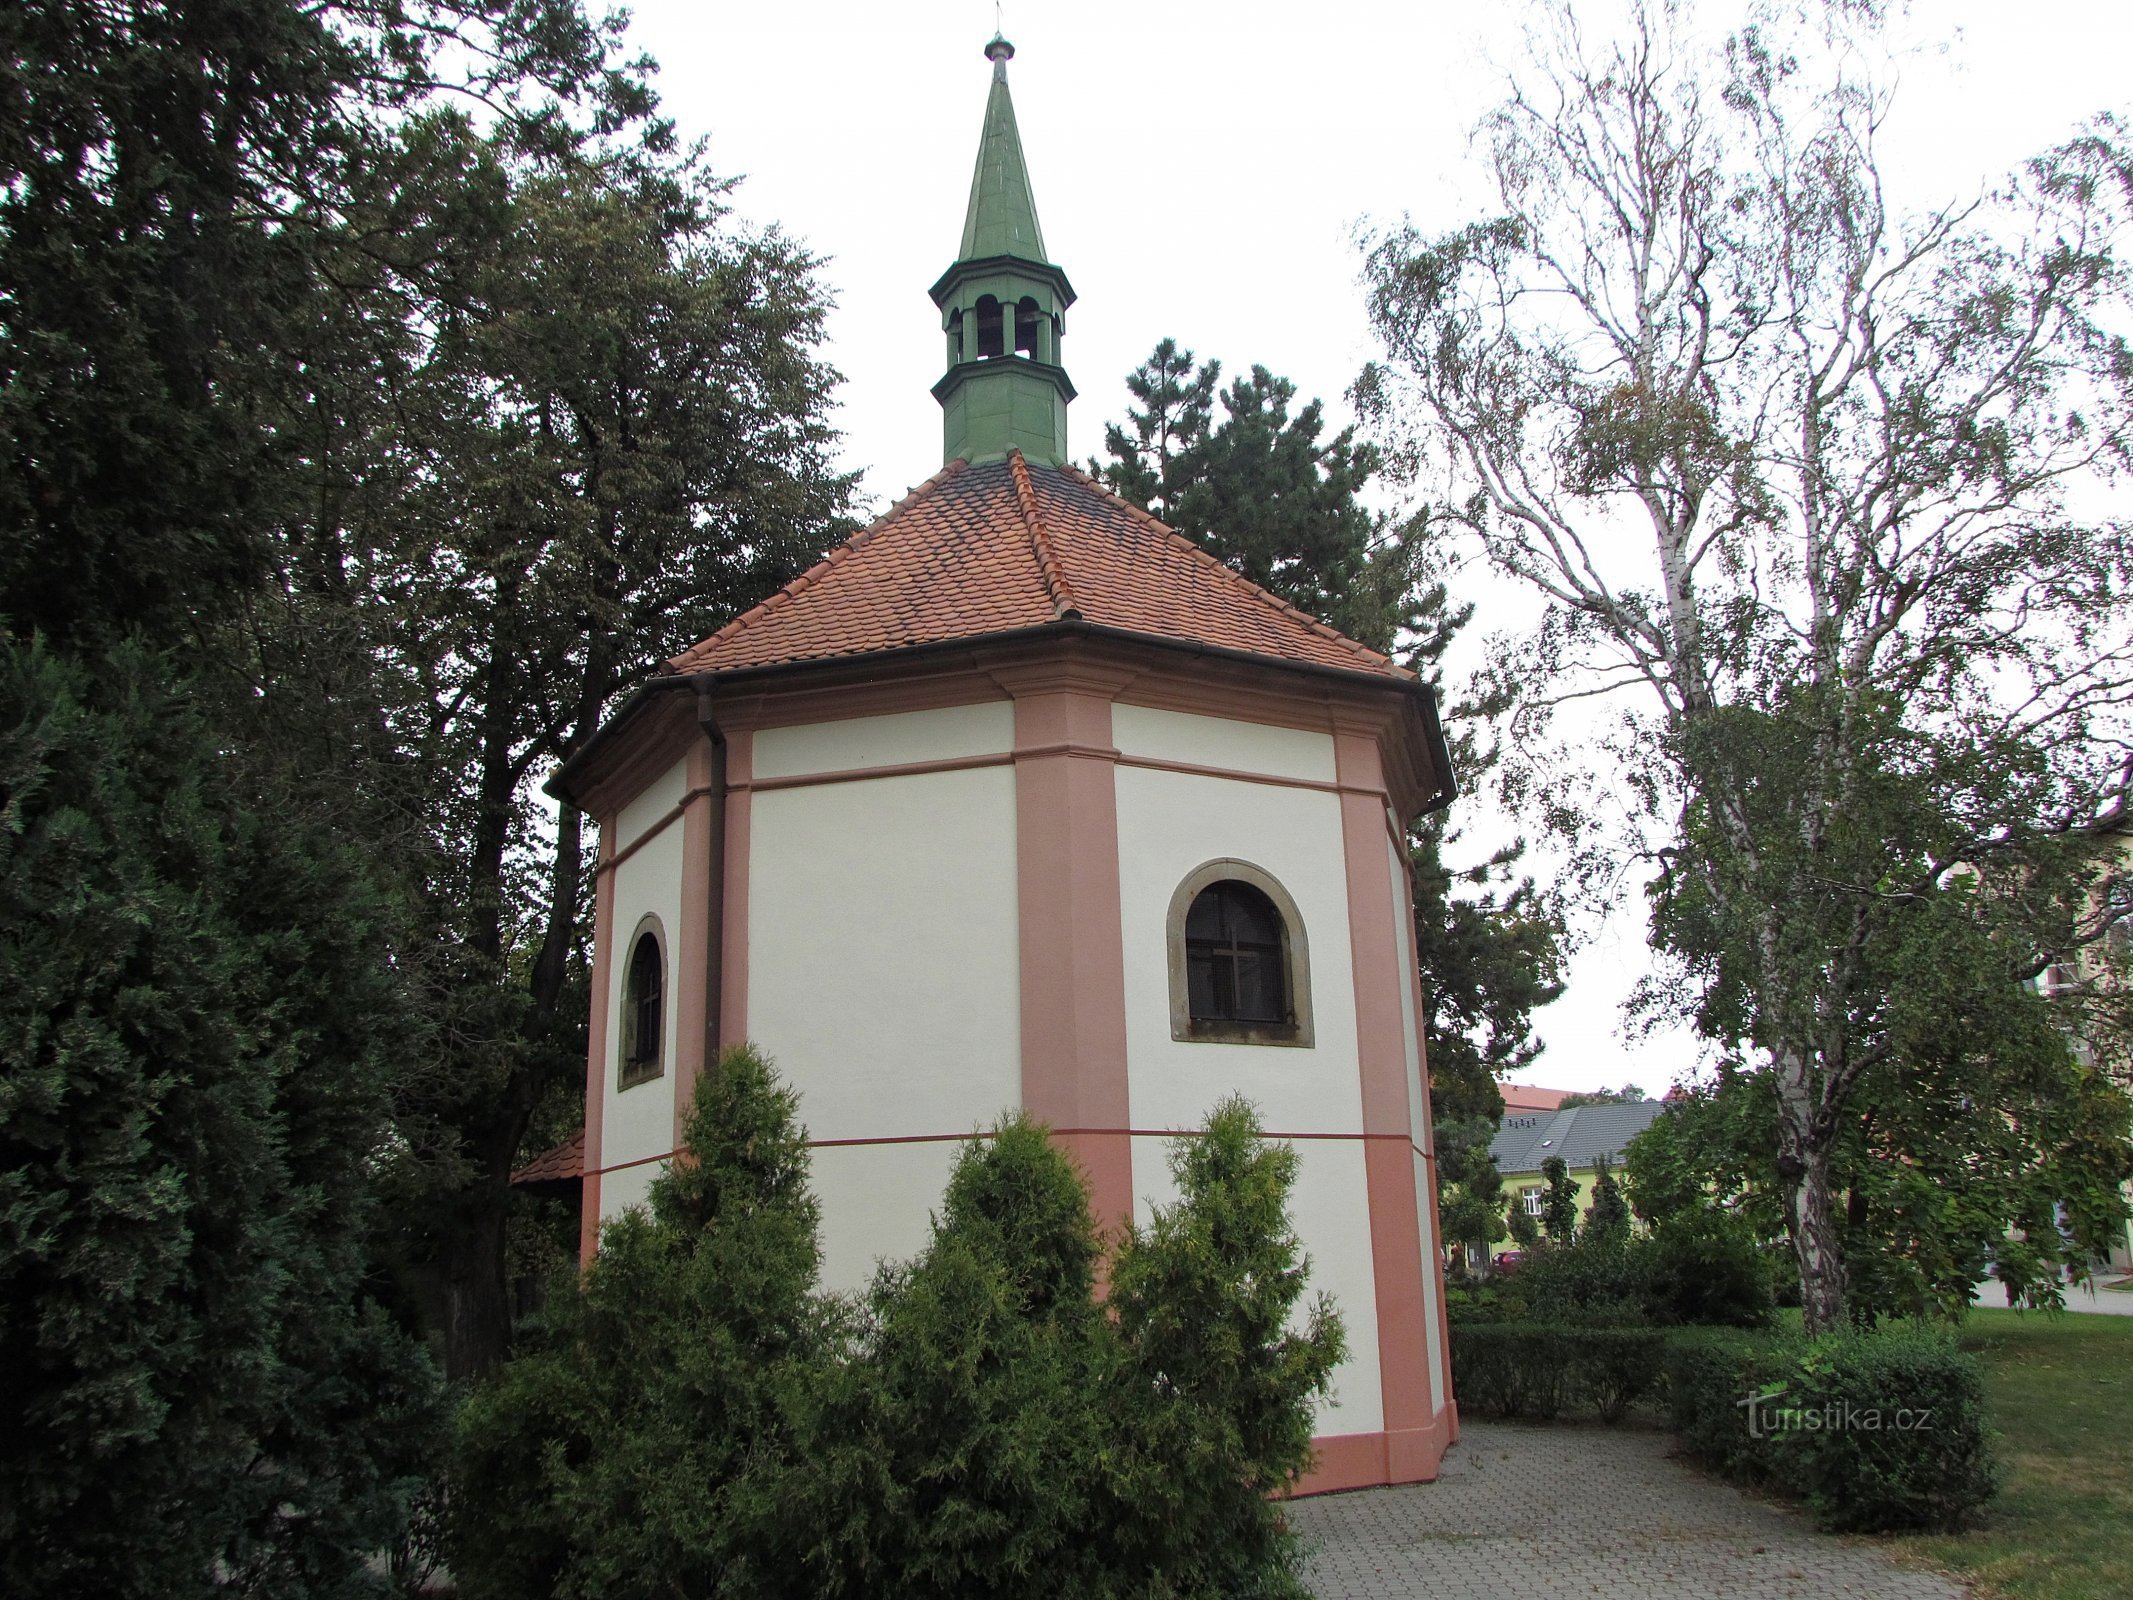 Holešovská Kapel van het Heilige Kruis